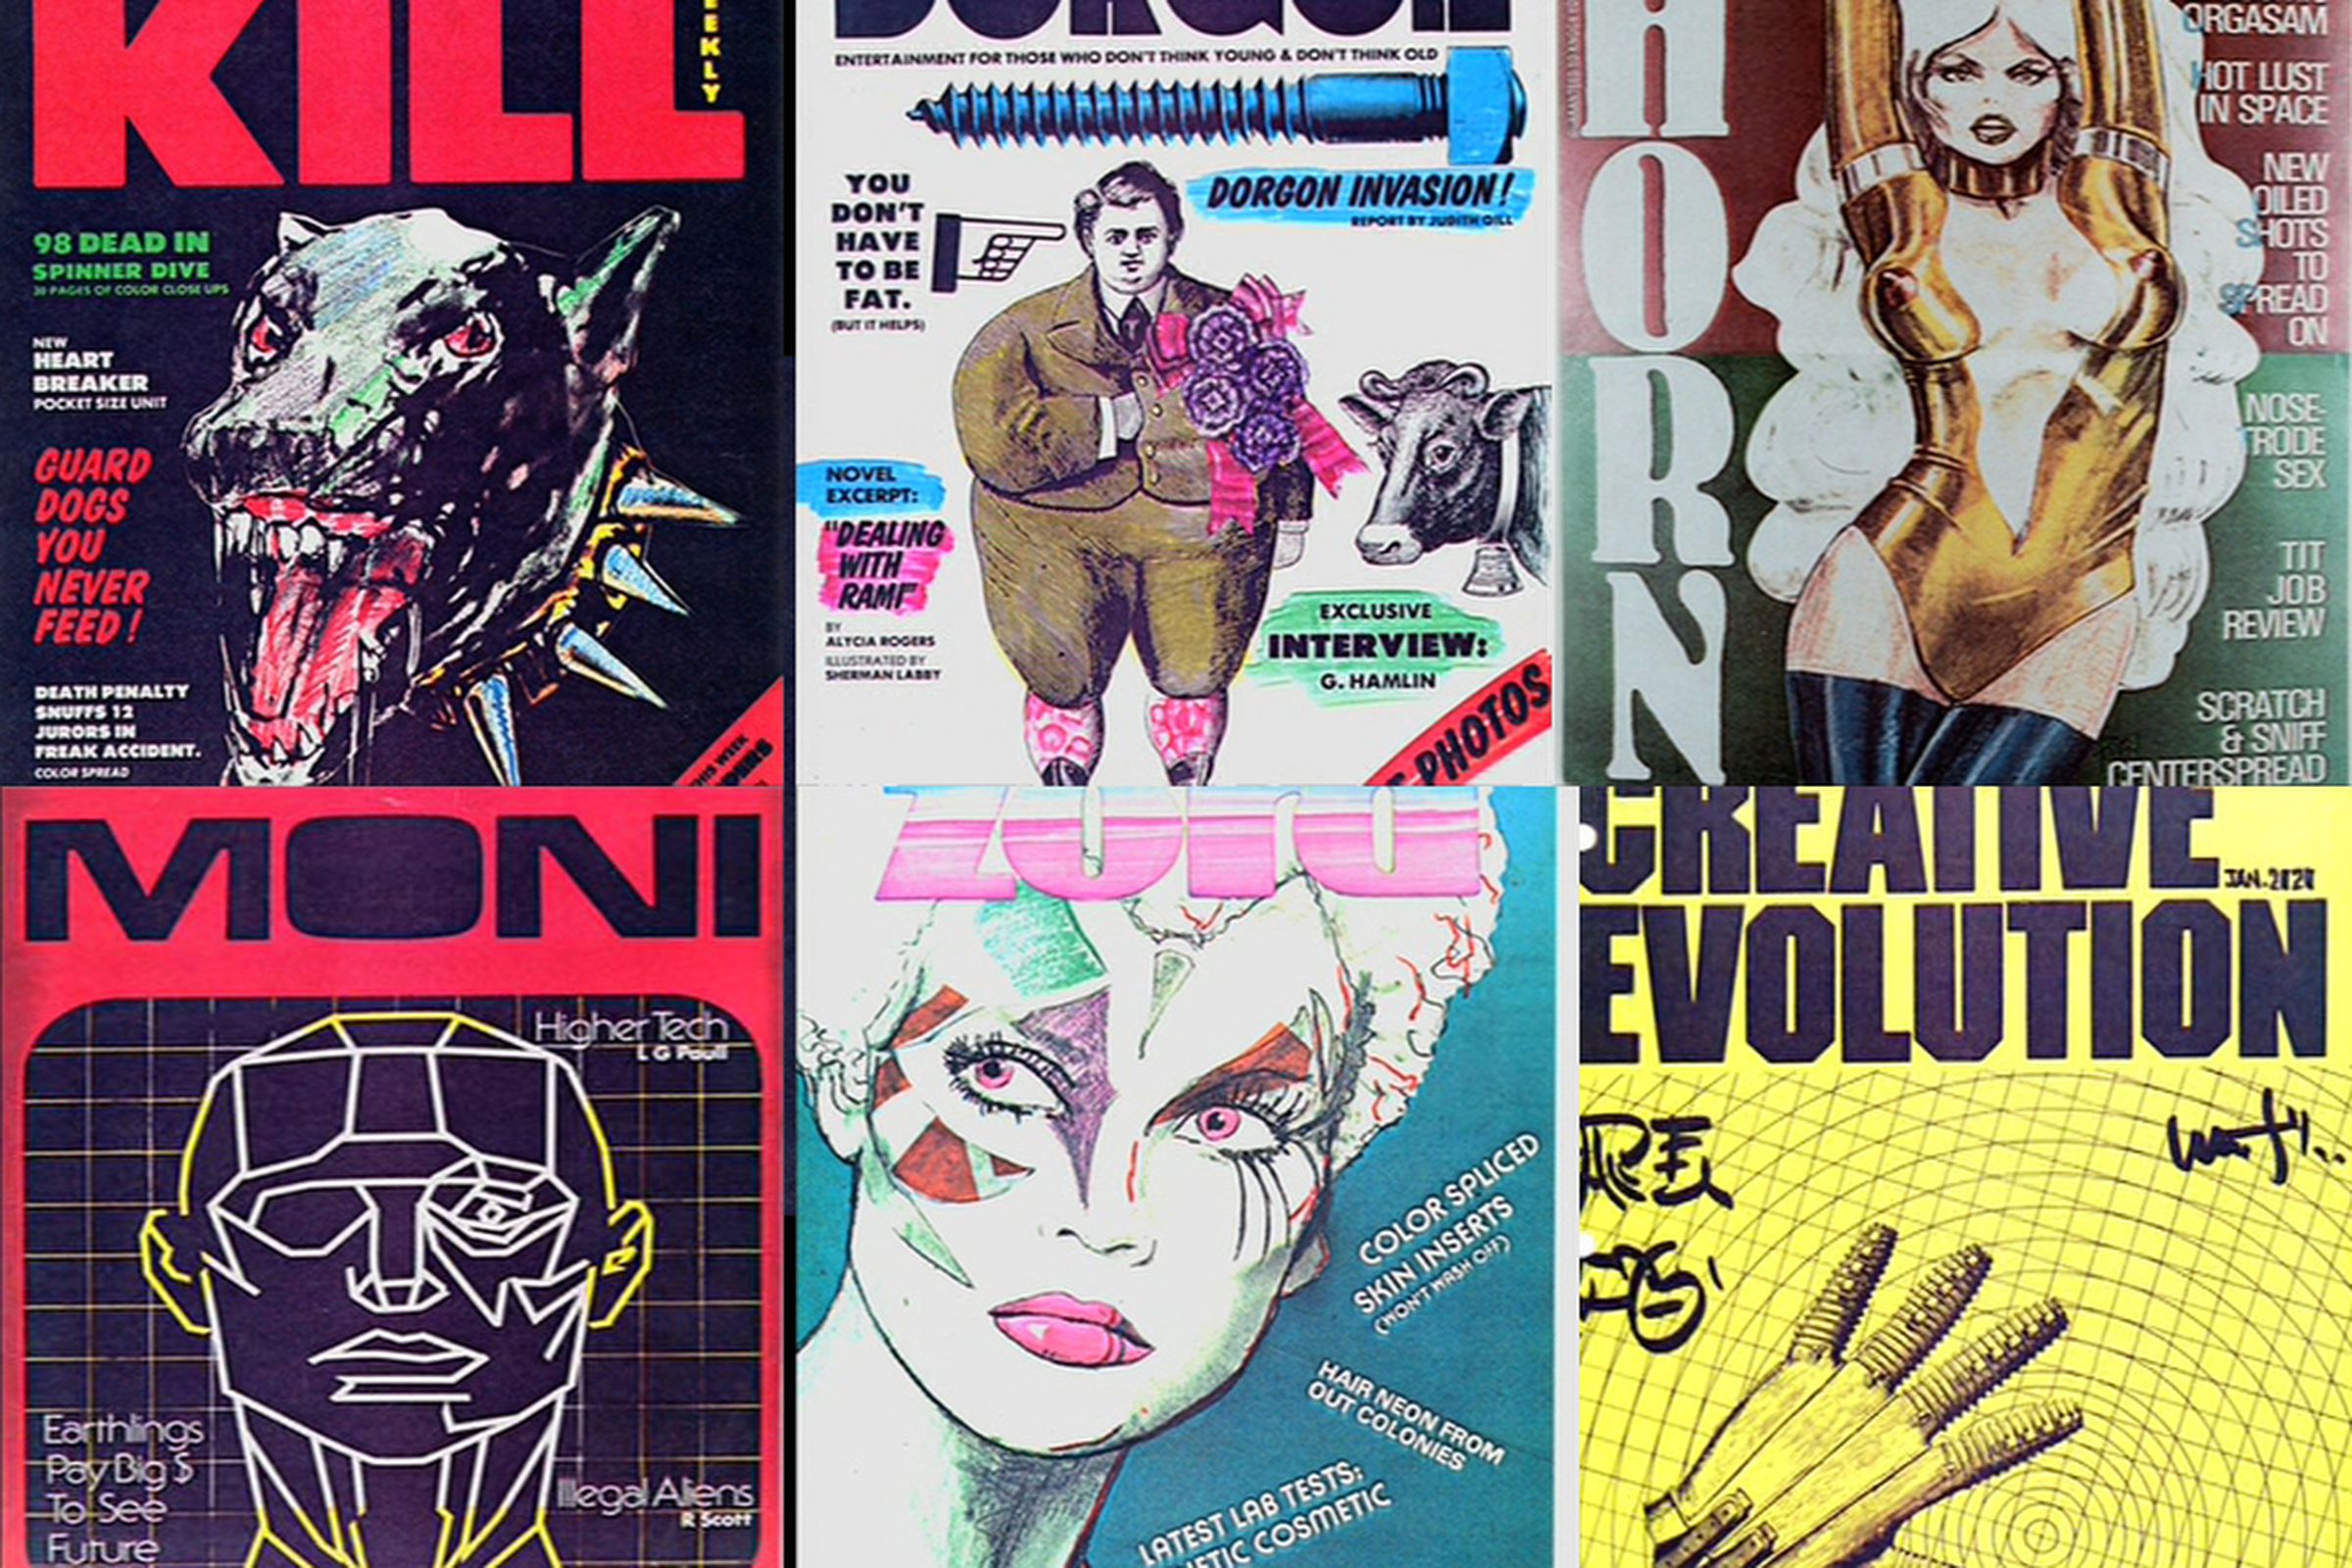 Blade Runner magazine covers